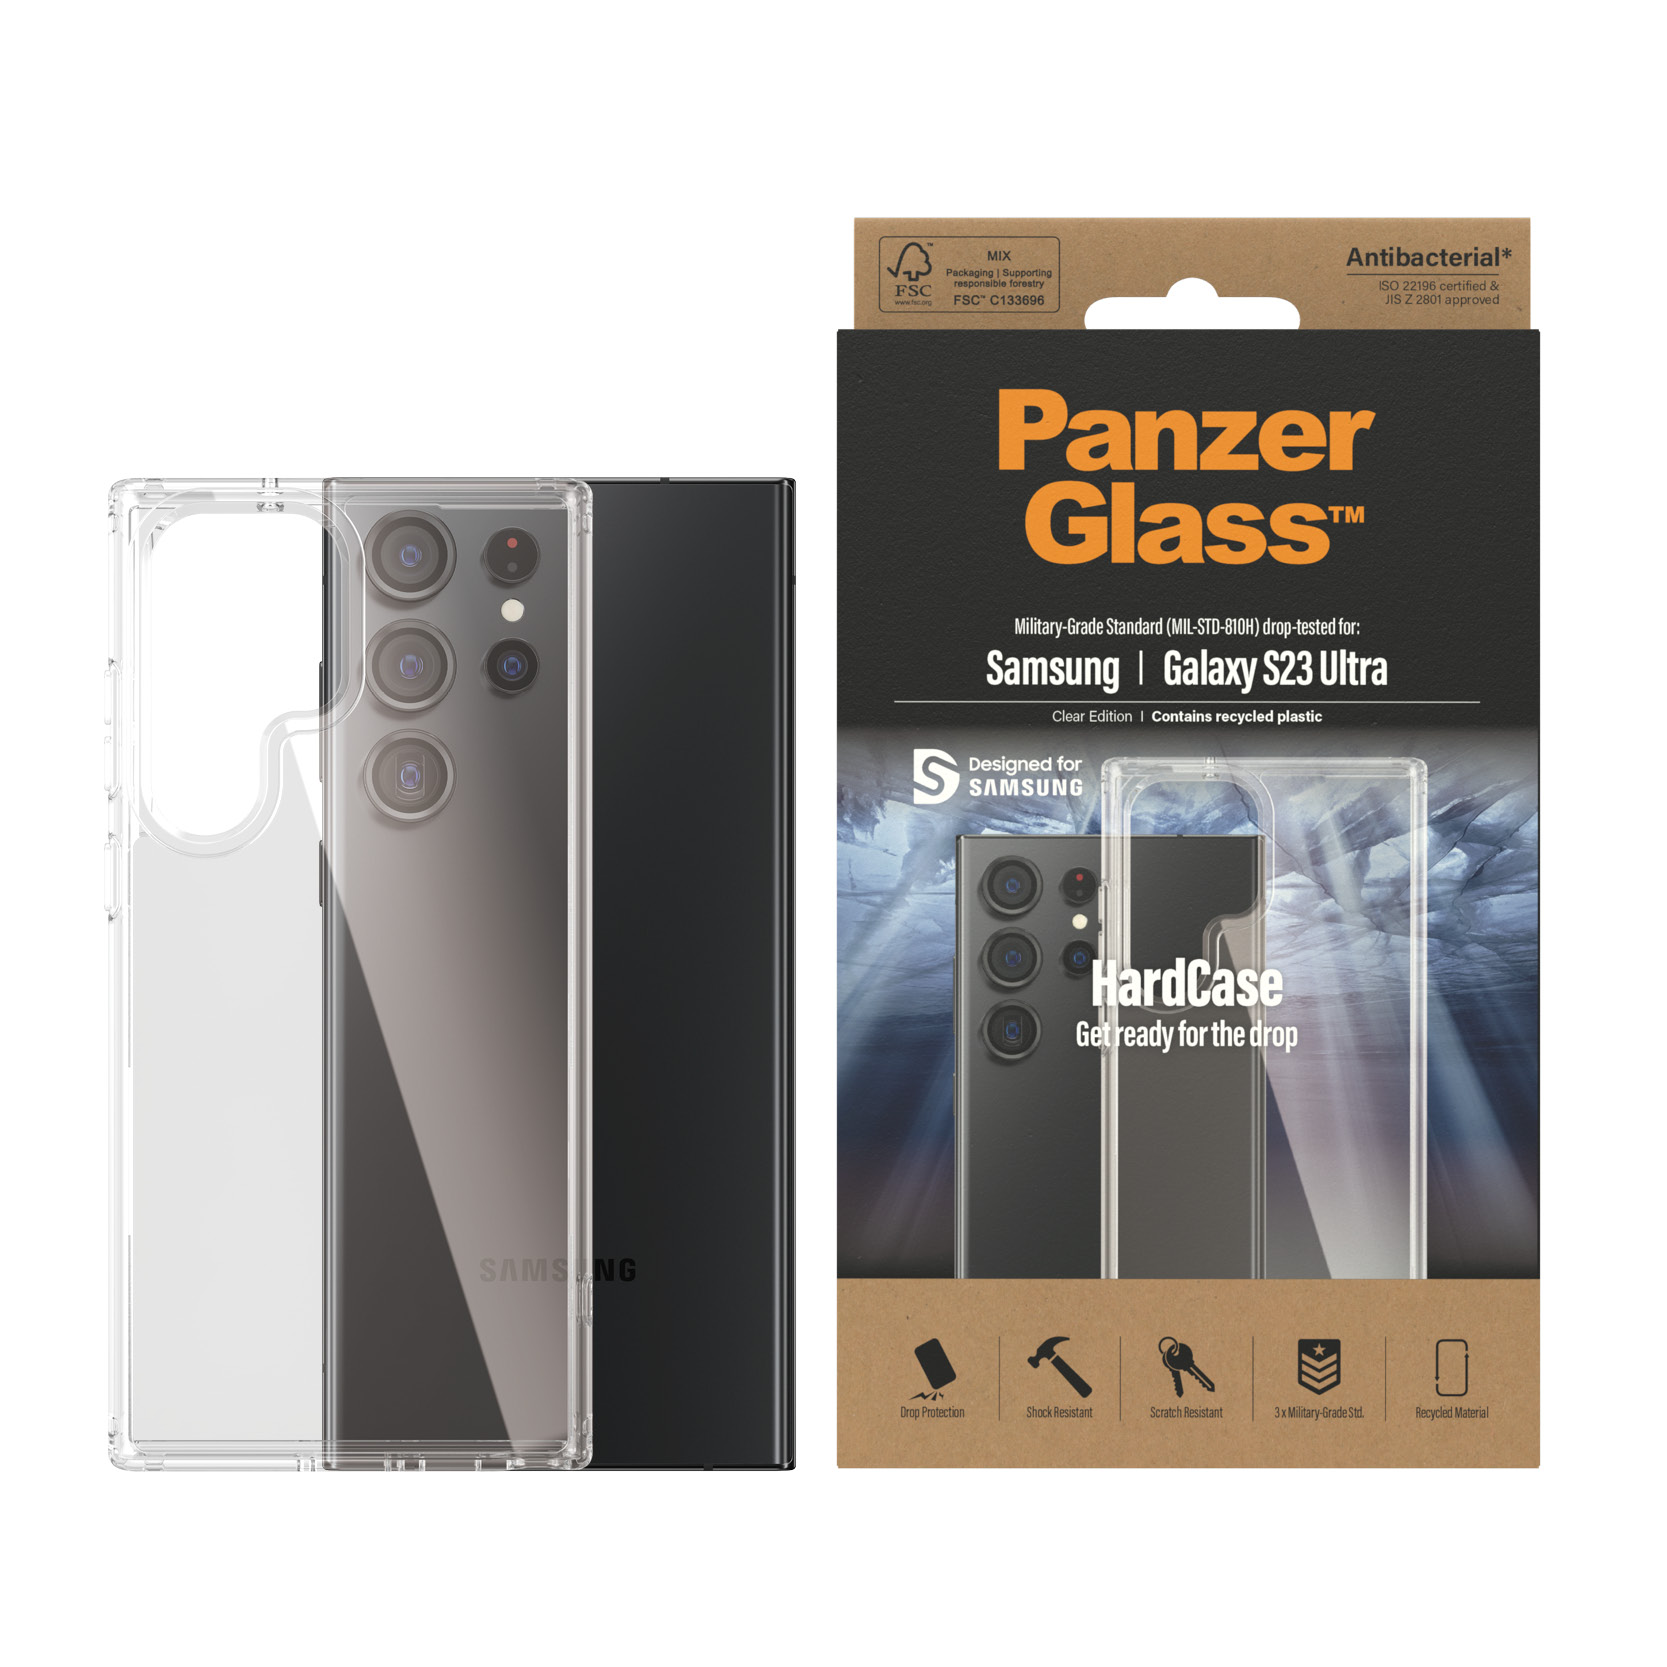 PanzerGlass Hard Case for Samsung Galaxy S 2023 Ultra AB